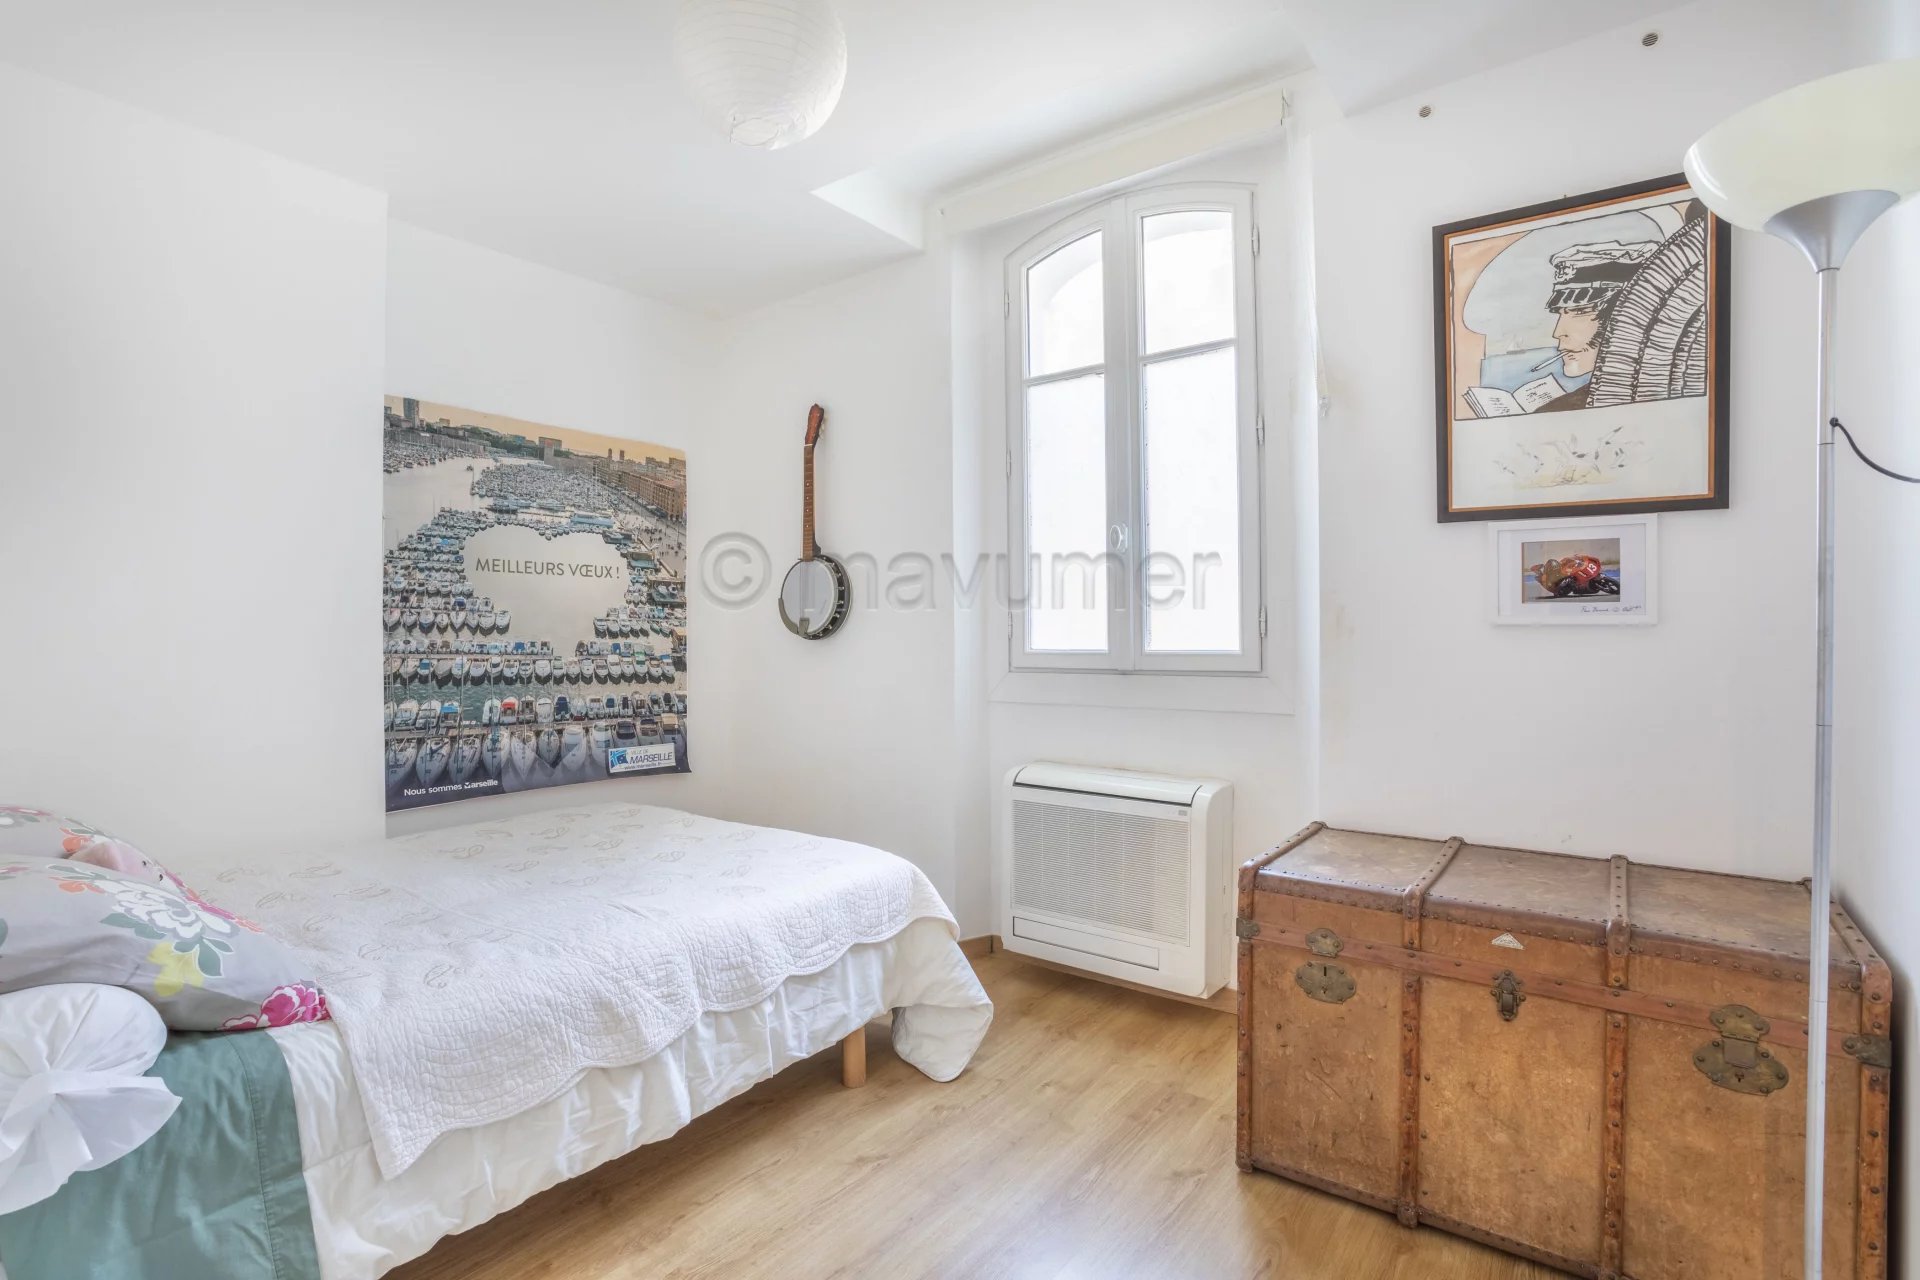 Sale Apartment - Marseille 1er